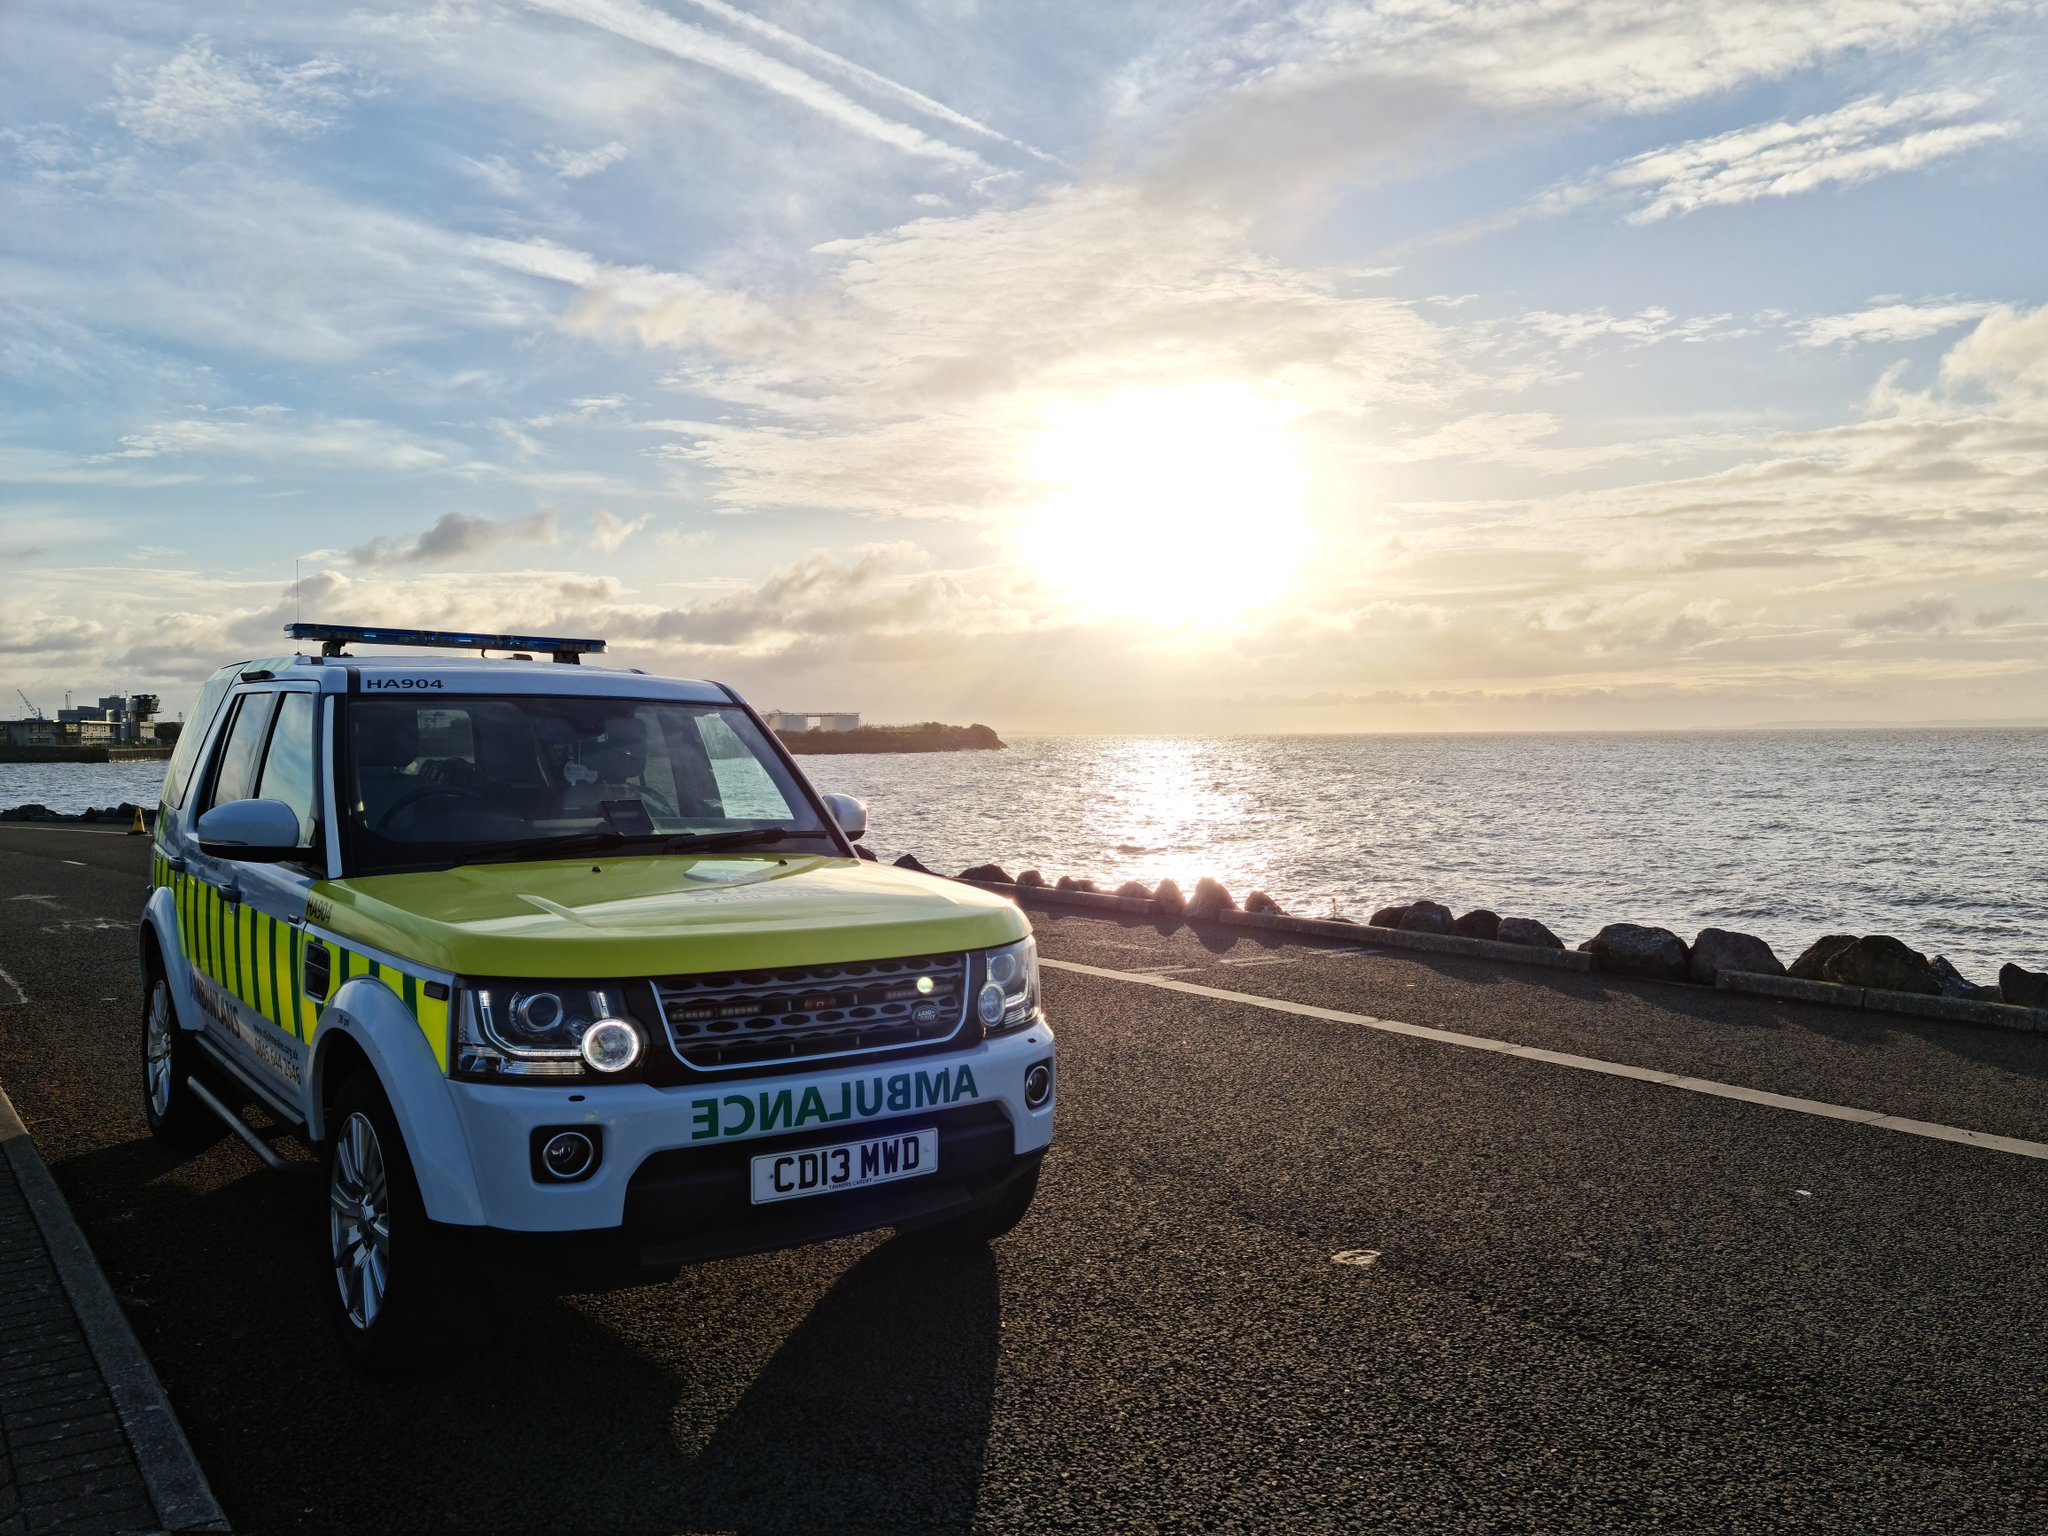 st john ambulance cymru in front of a sunset